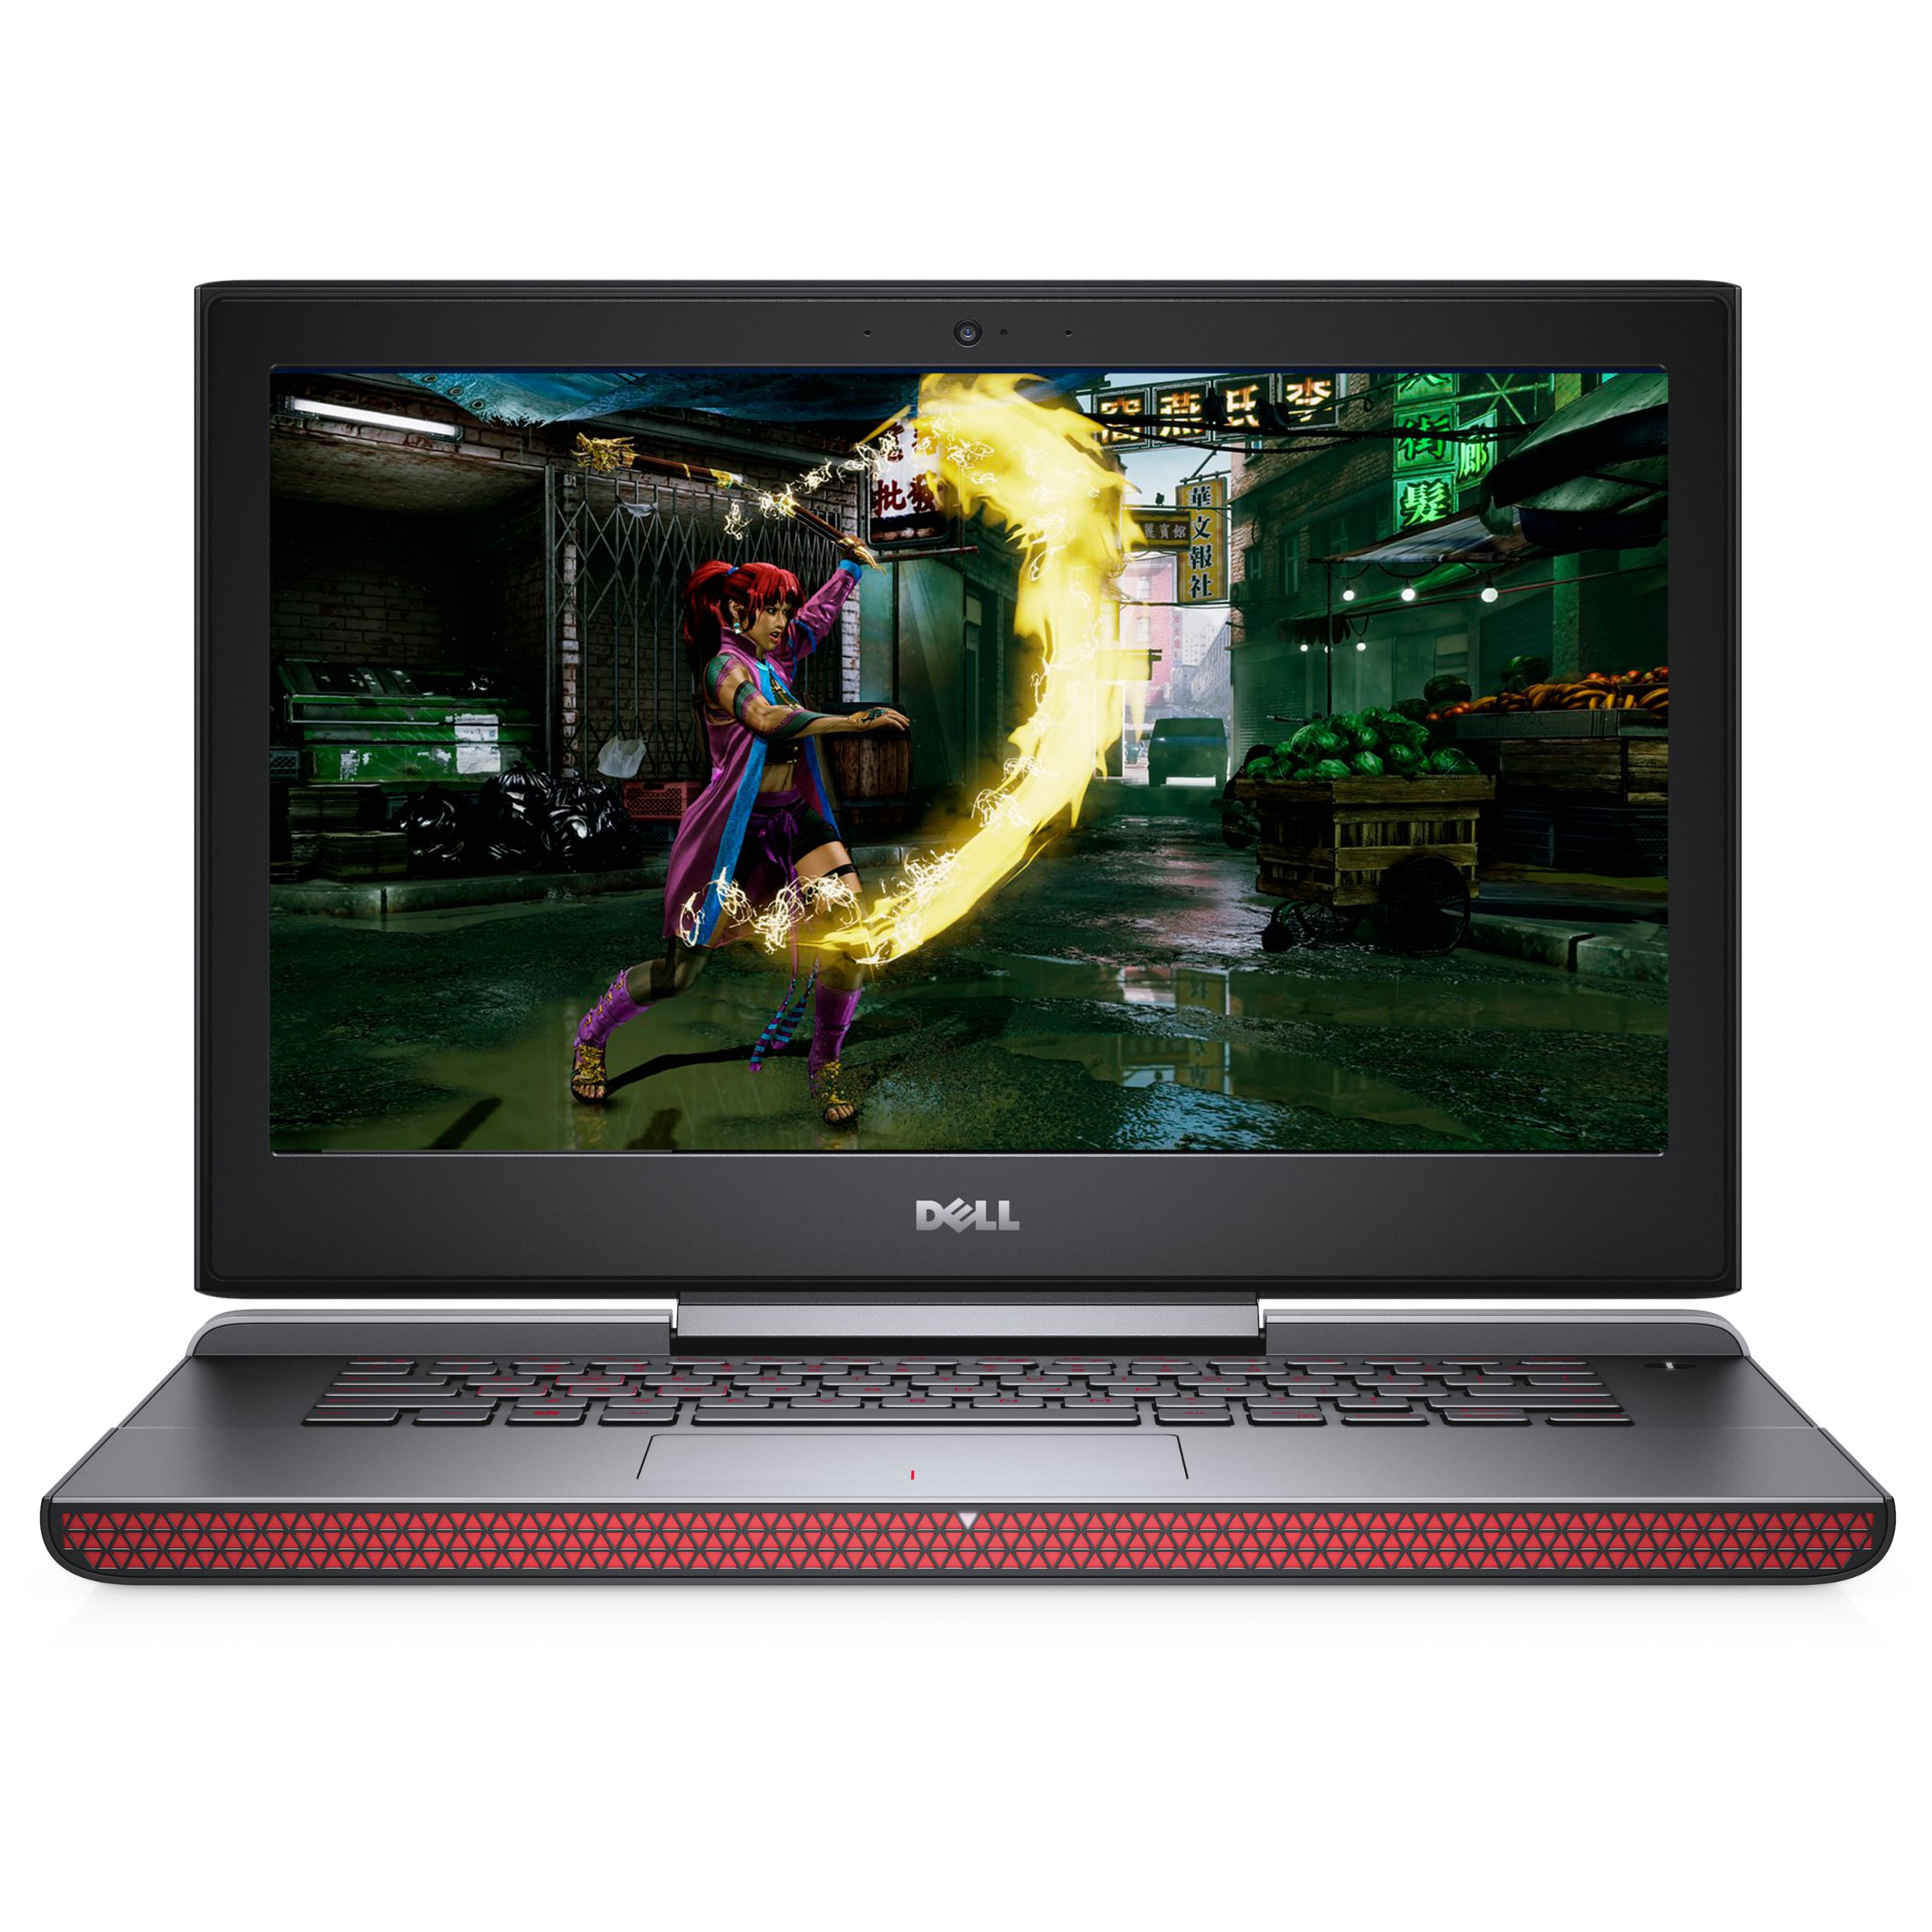 Dell Inspiron 15 Gaming Laptop Intel Core I5 8gb Ram 256gb Ssd Nvidia Geforce Gtx 960m 15 6 Black At John Lewis Partners